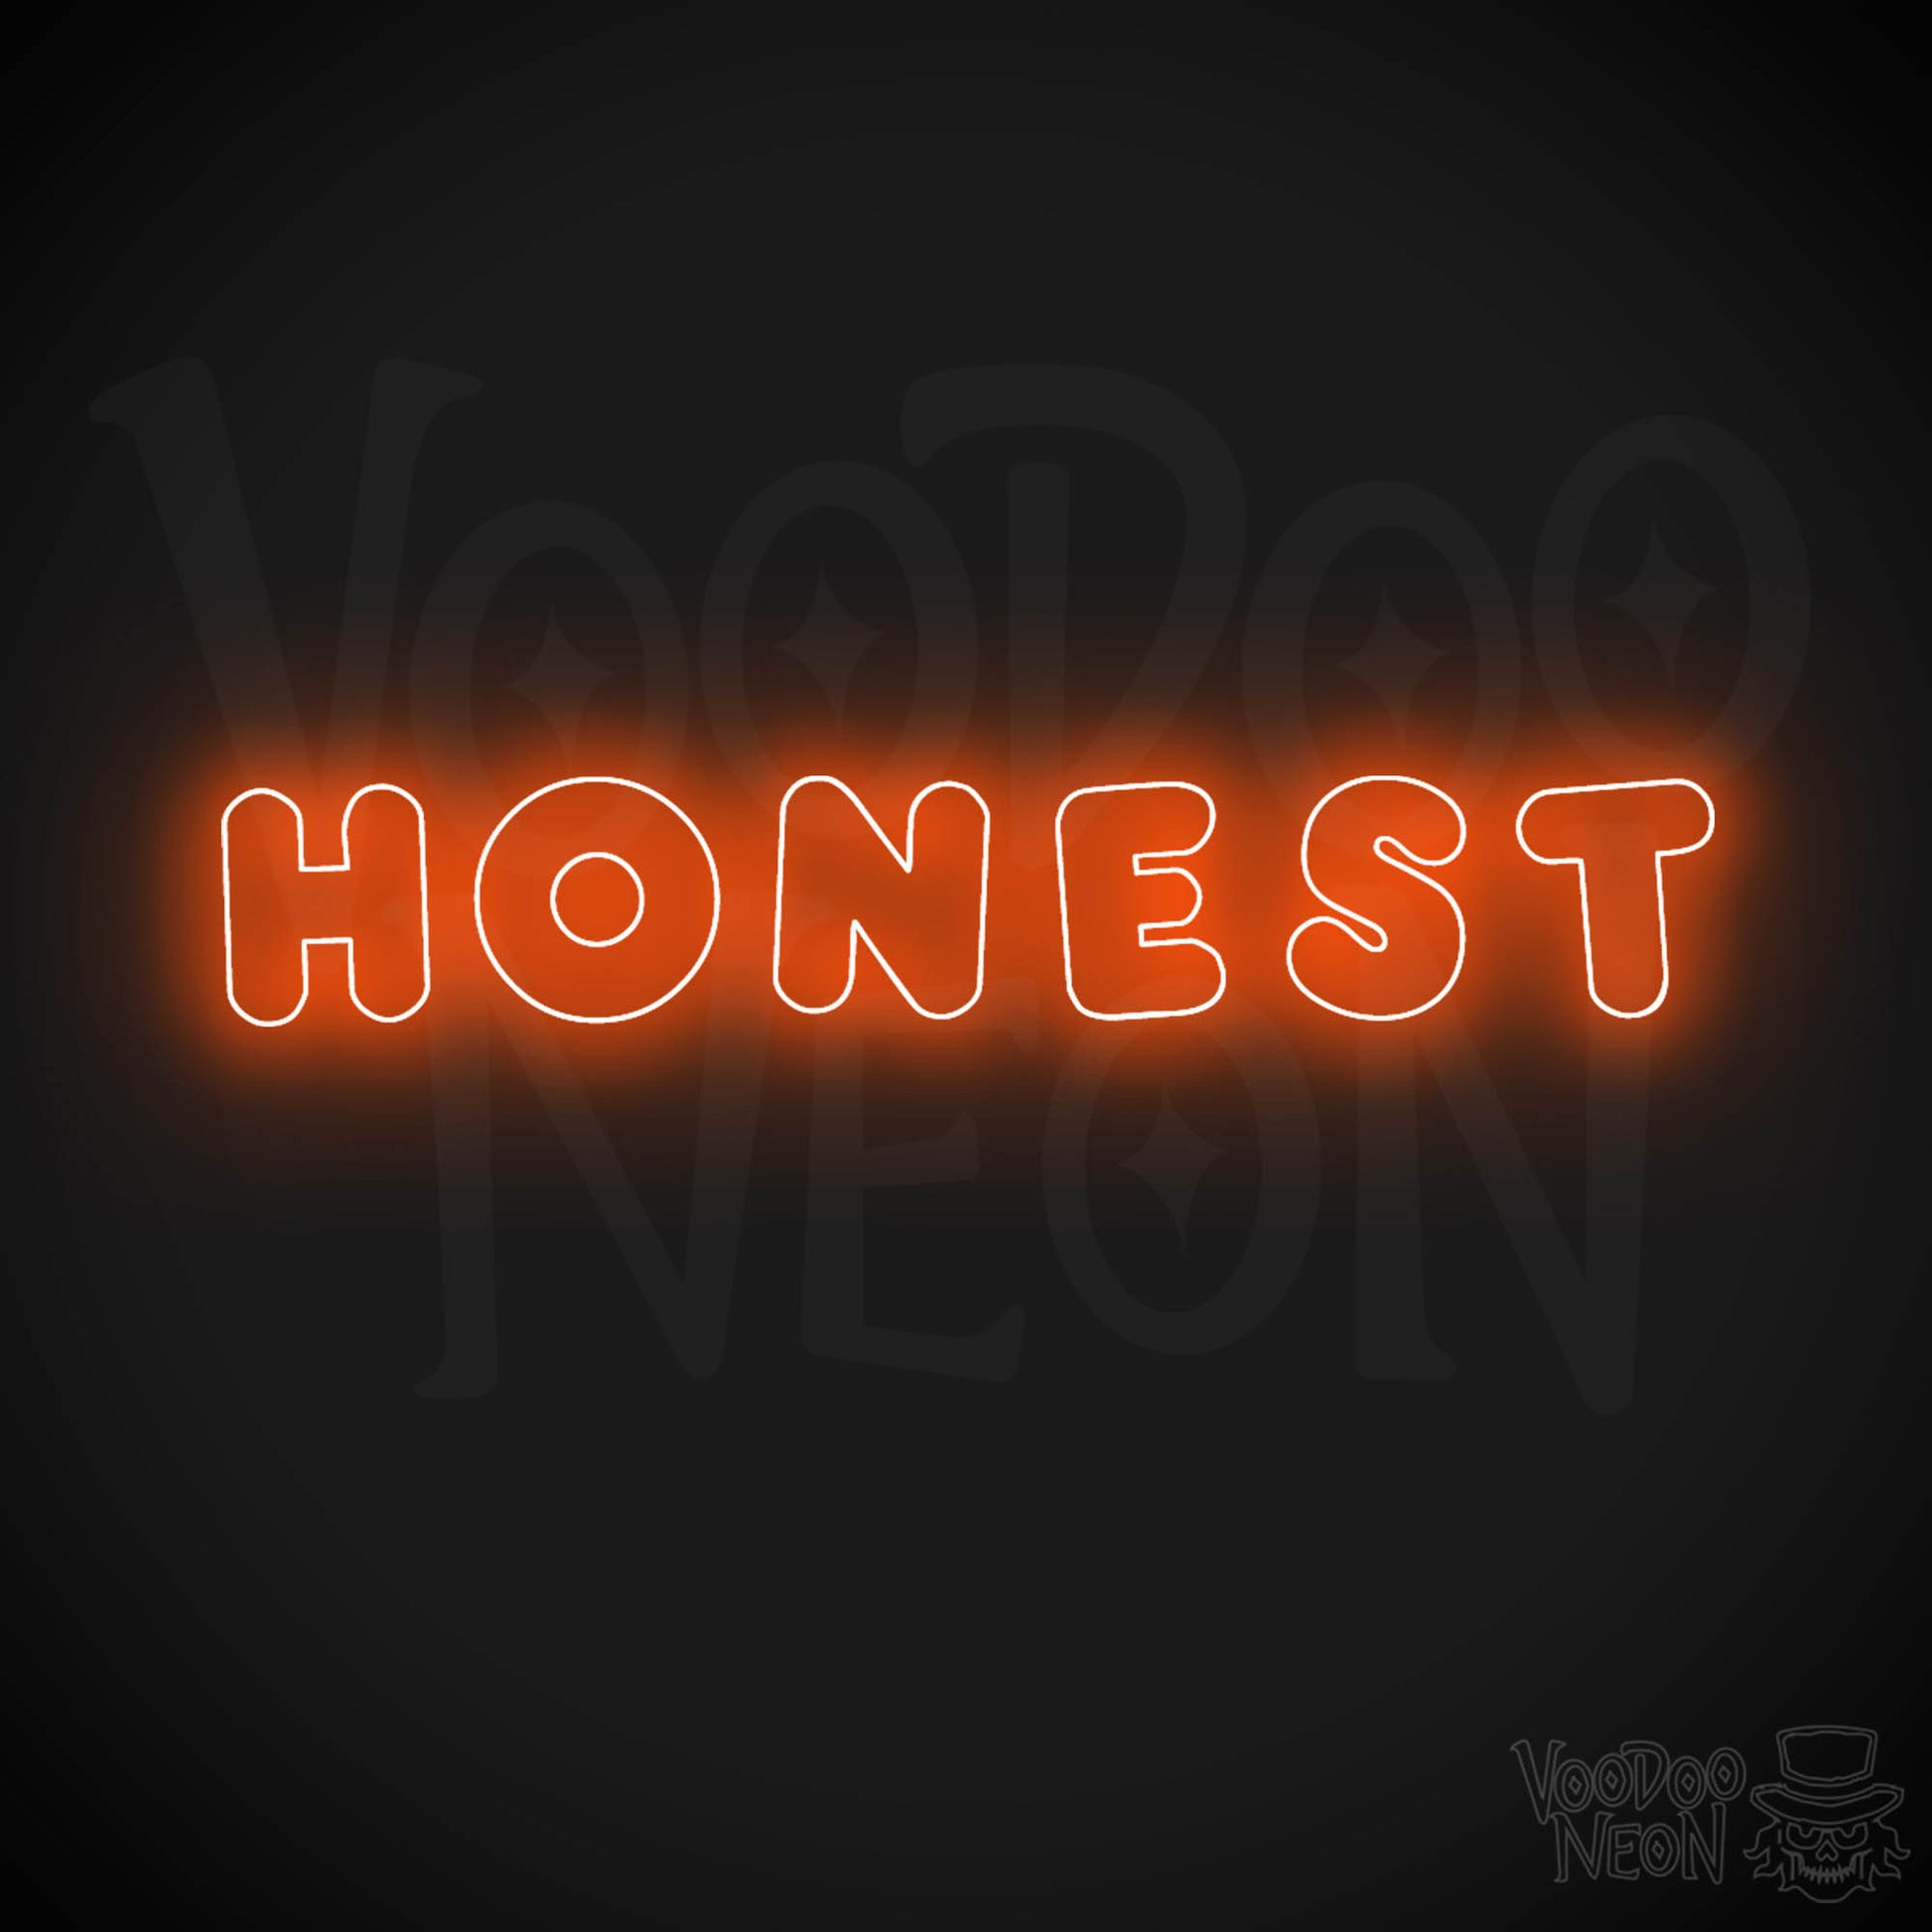 Honest Neon Sign - Neon Honest Sign - LED Neon Wall Art - Color Orange